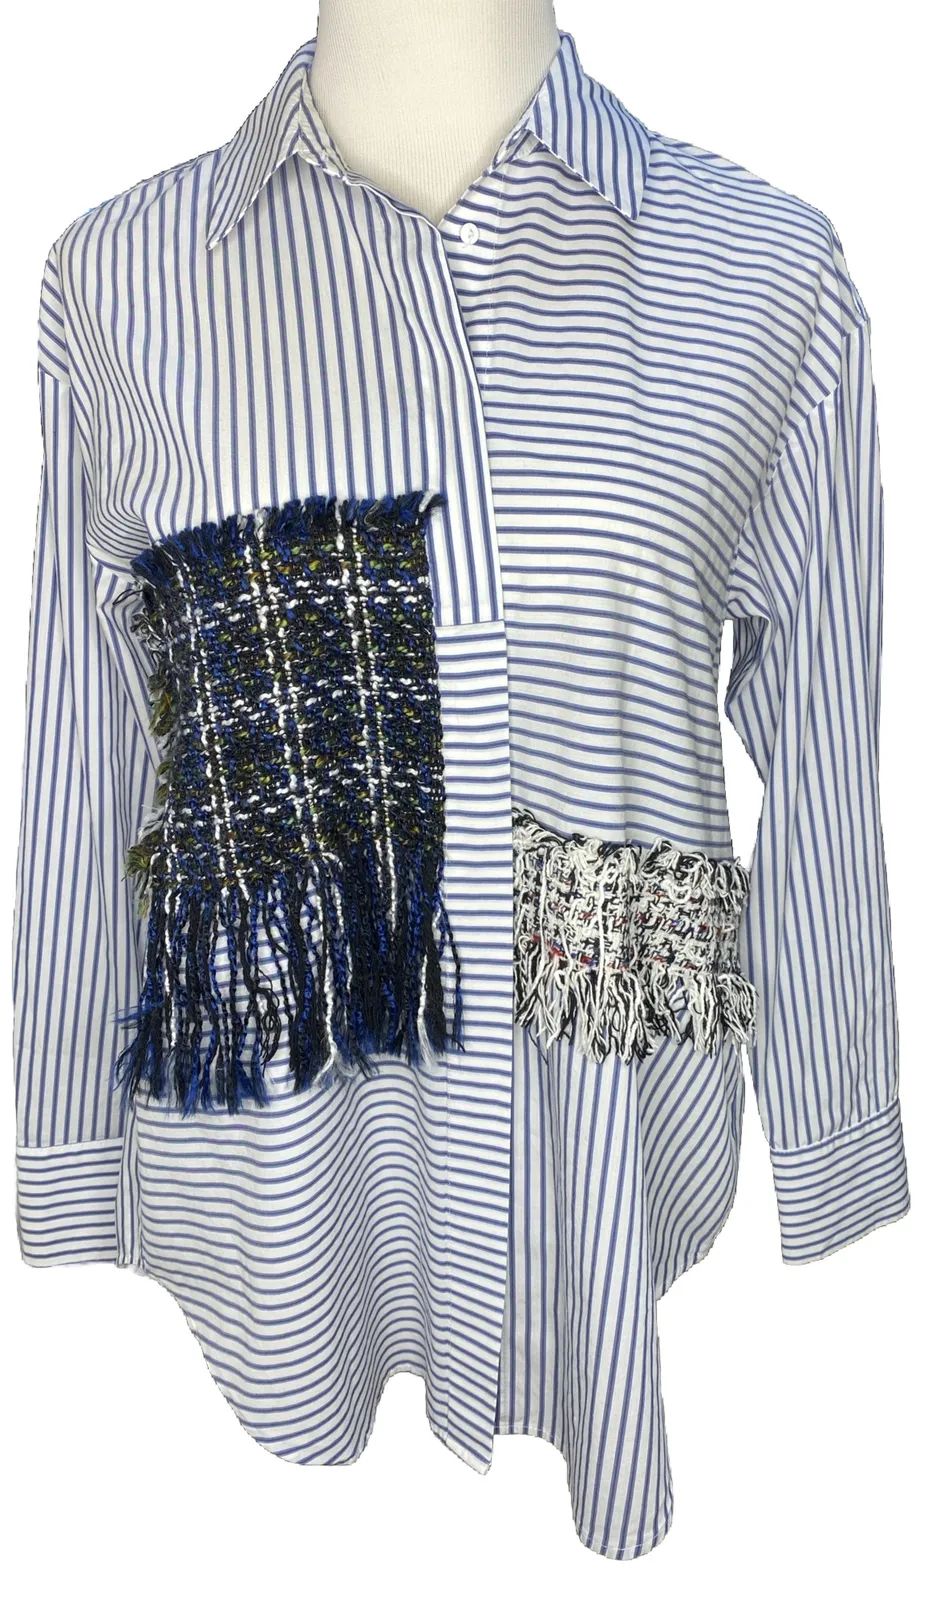 Zara blue & white striped contrast tweed long sleeved button down shirt XS  | eBay | eBay US